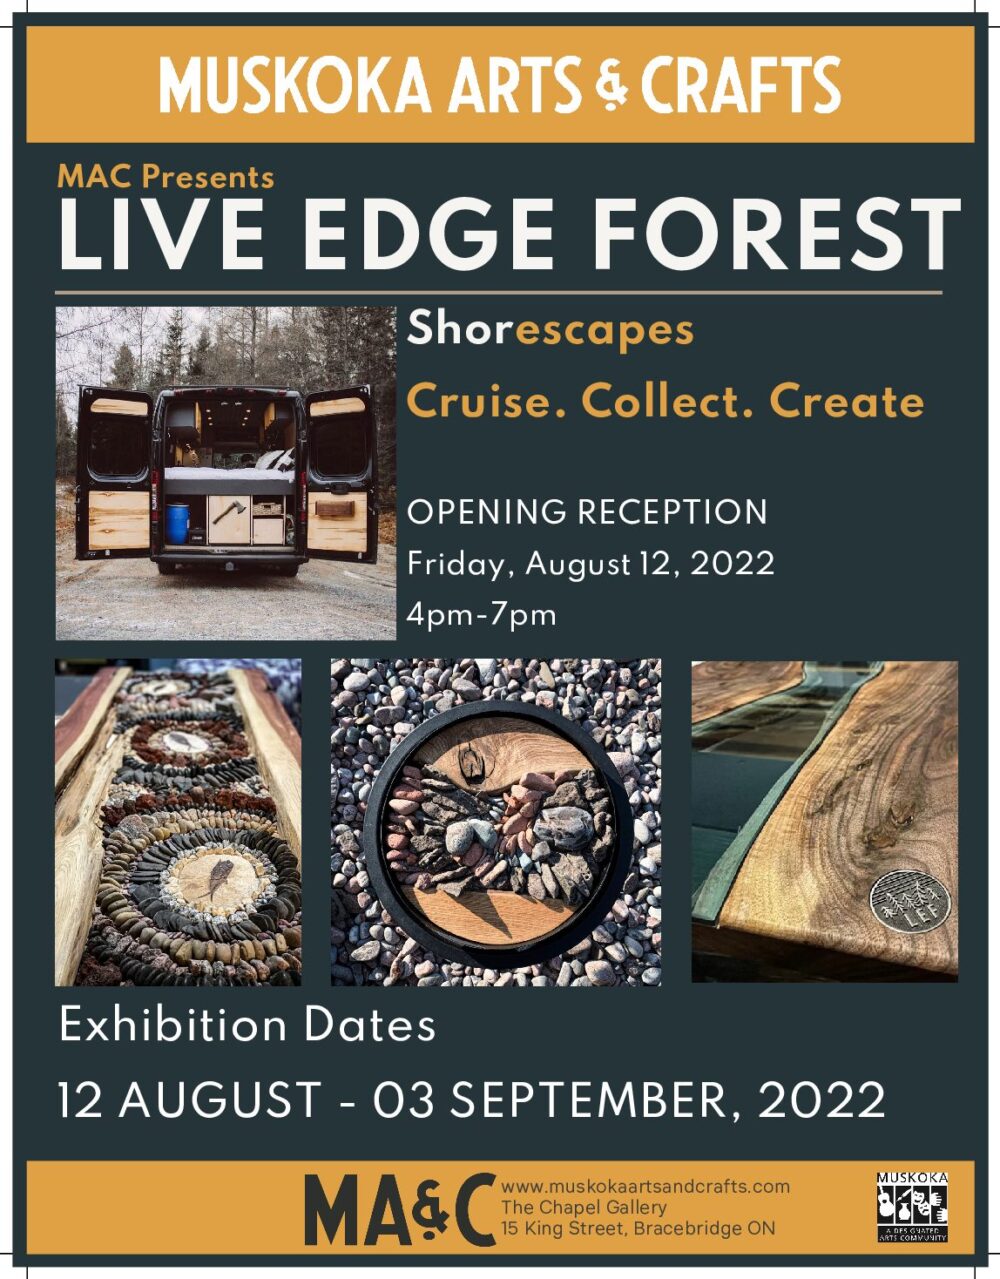 Muskoka Arts &#038; Crafts presents Live Edge Forest: Shorescapes